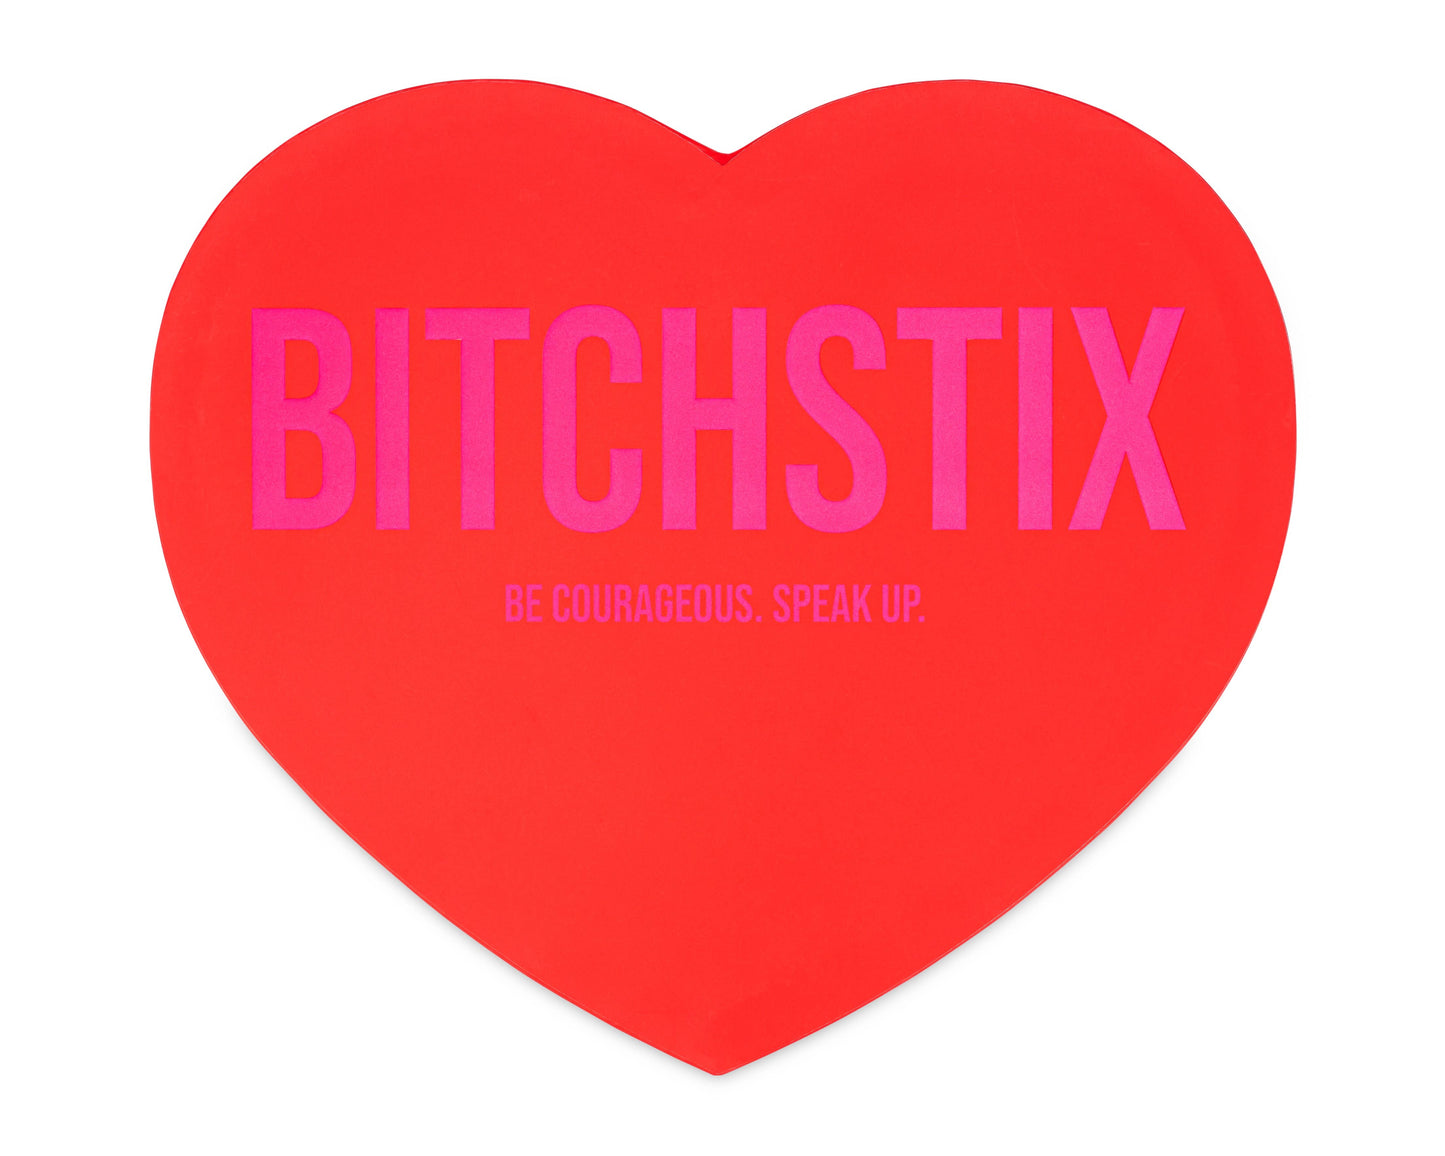 Bitchstix - Heart Box Lip Oil Trio with Organic Lip Balm Gift Set